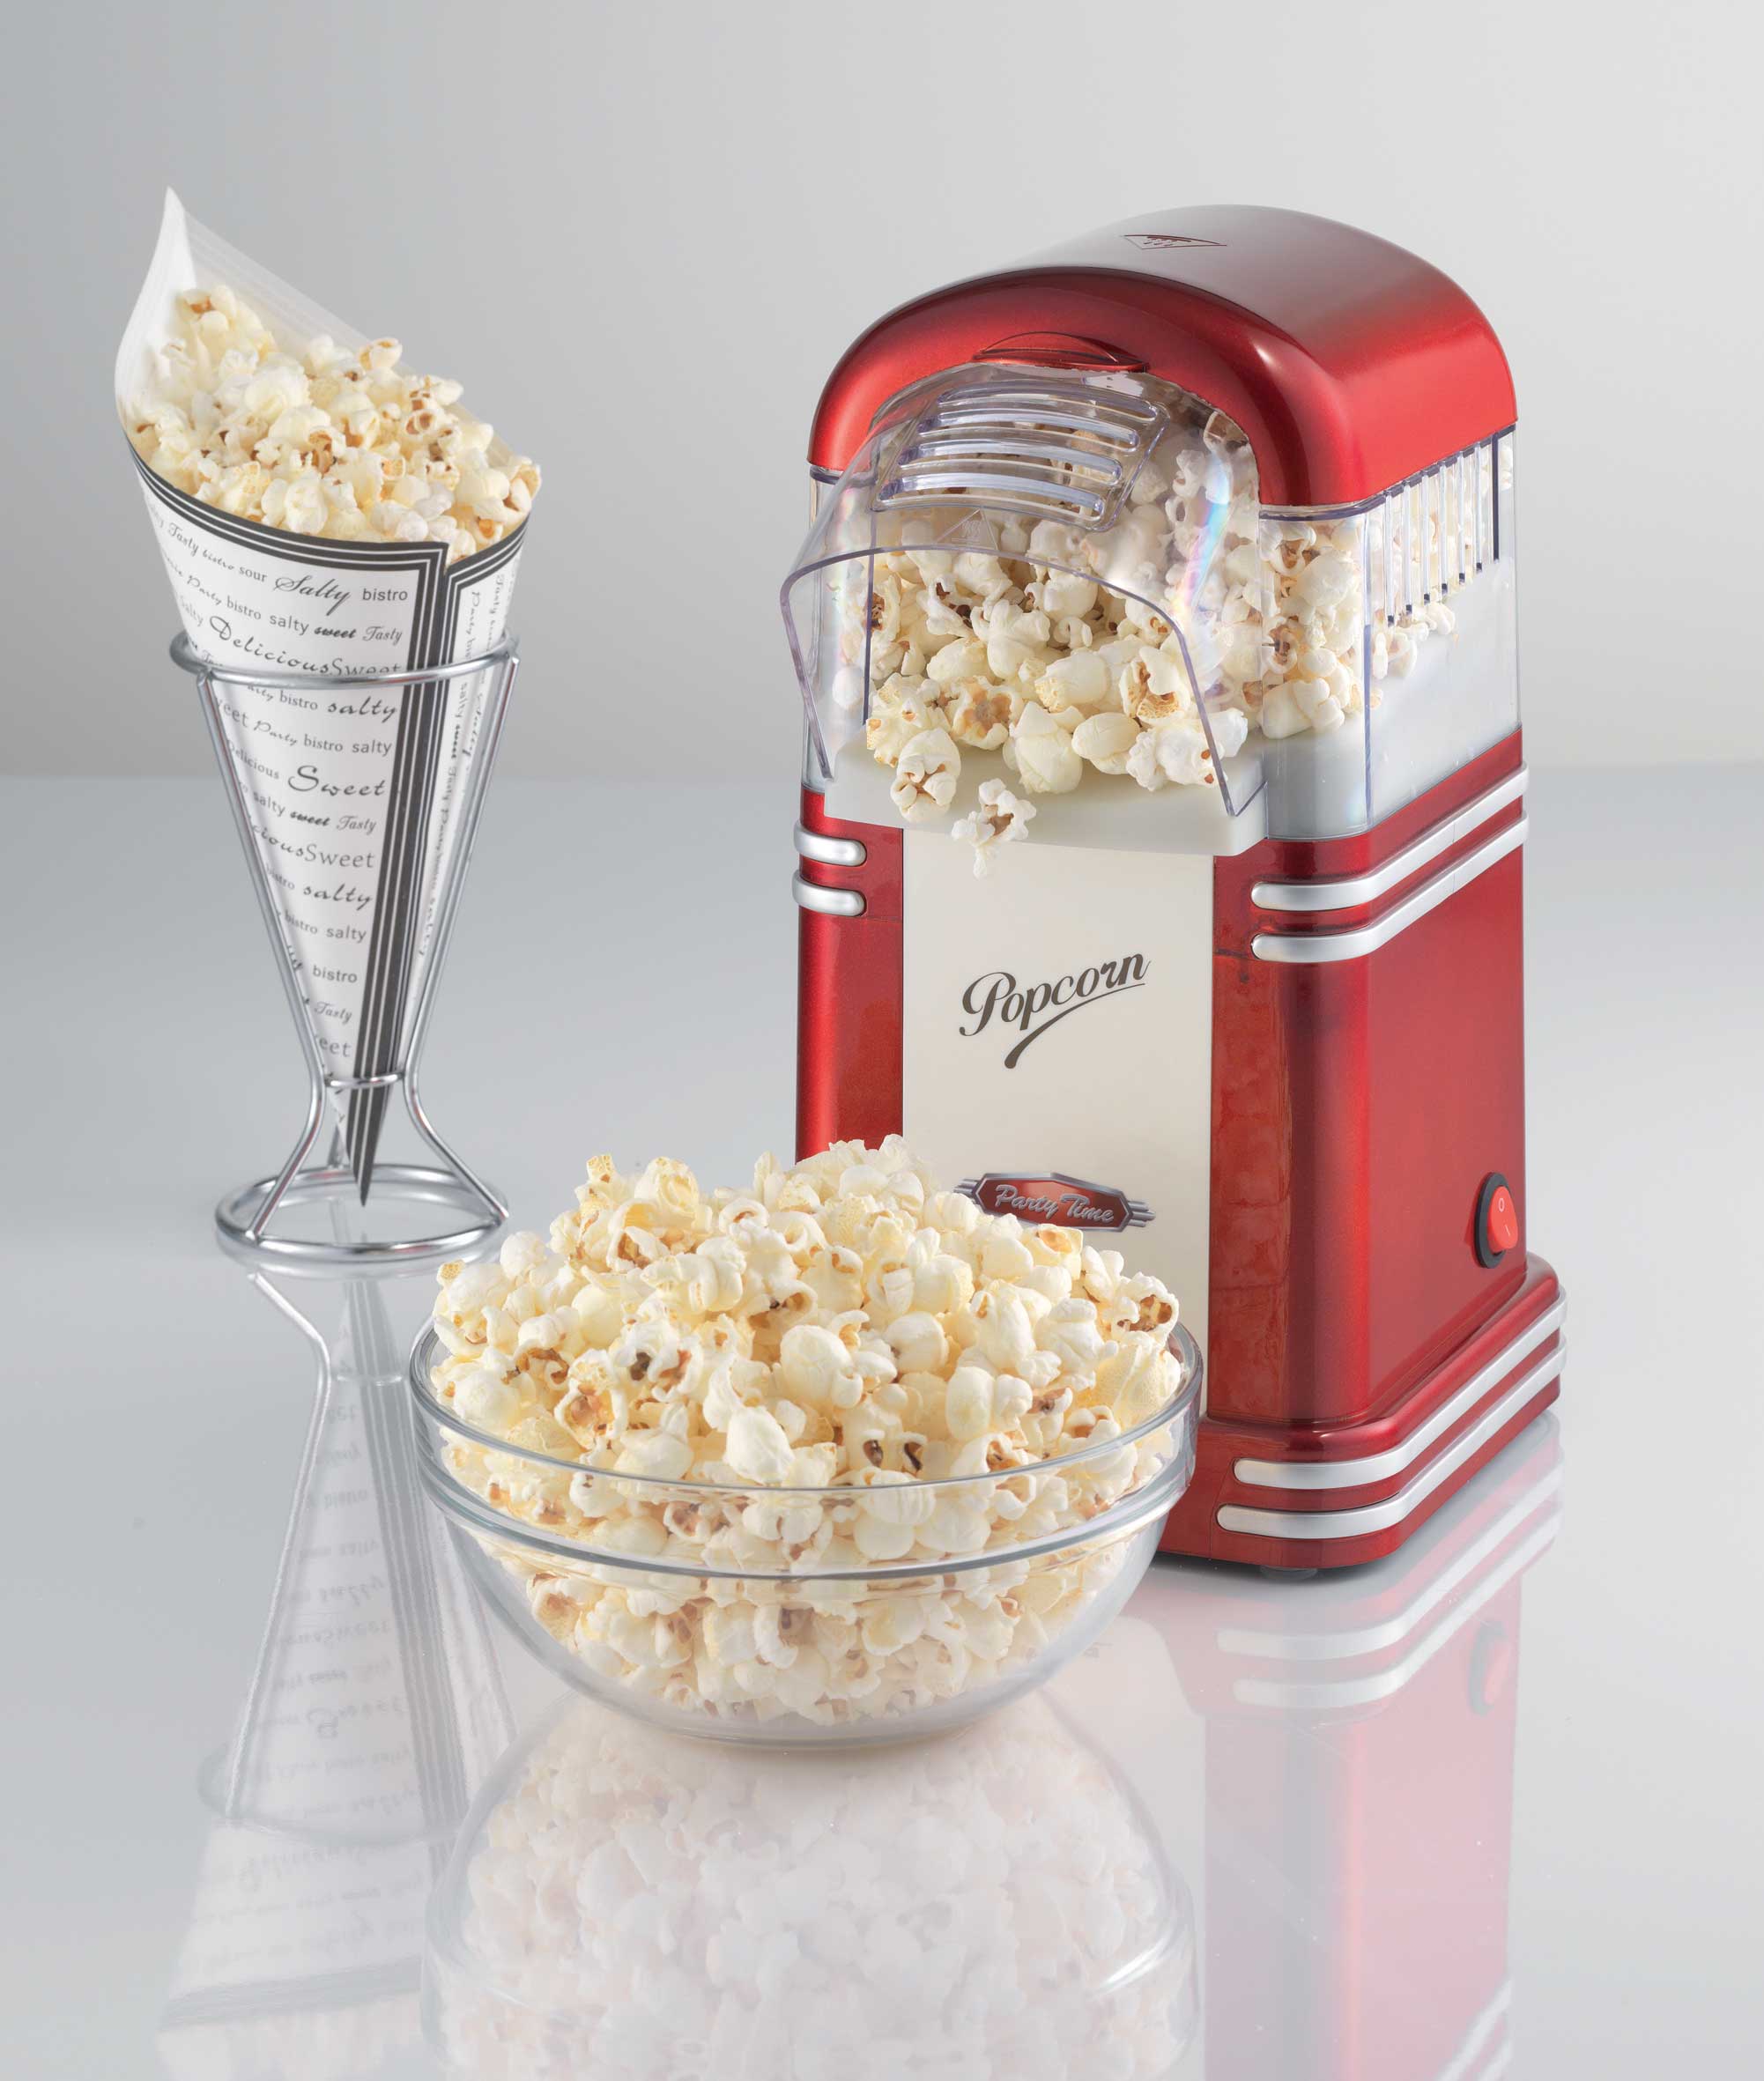 instructions for nostalgia popcorn machine